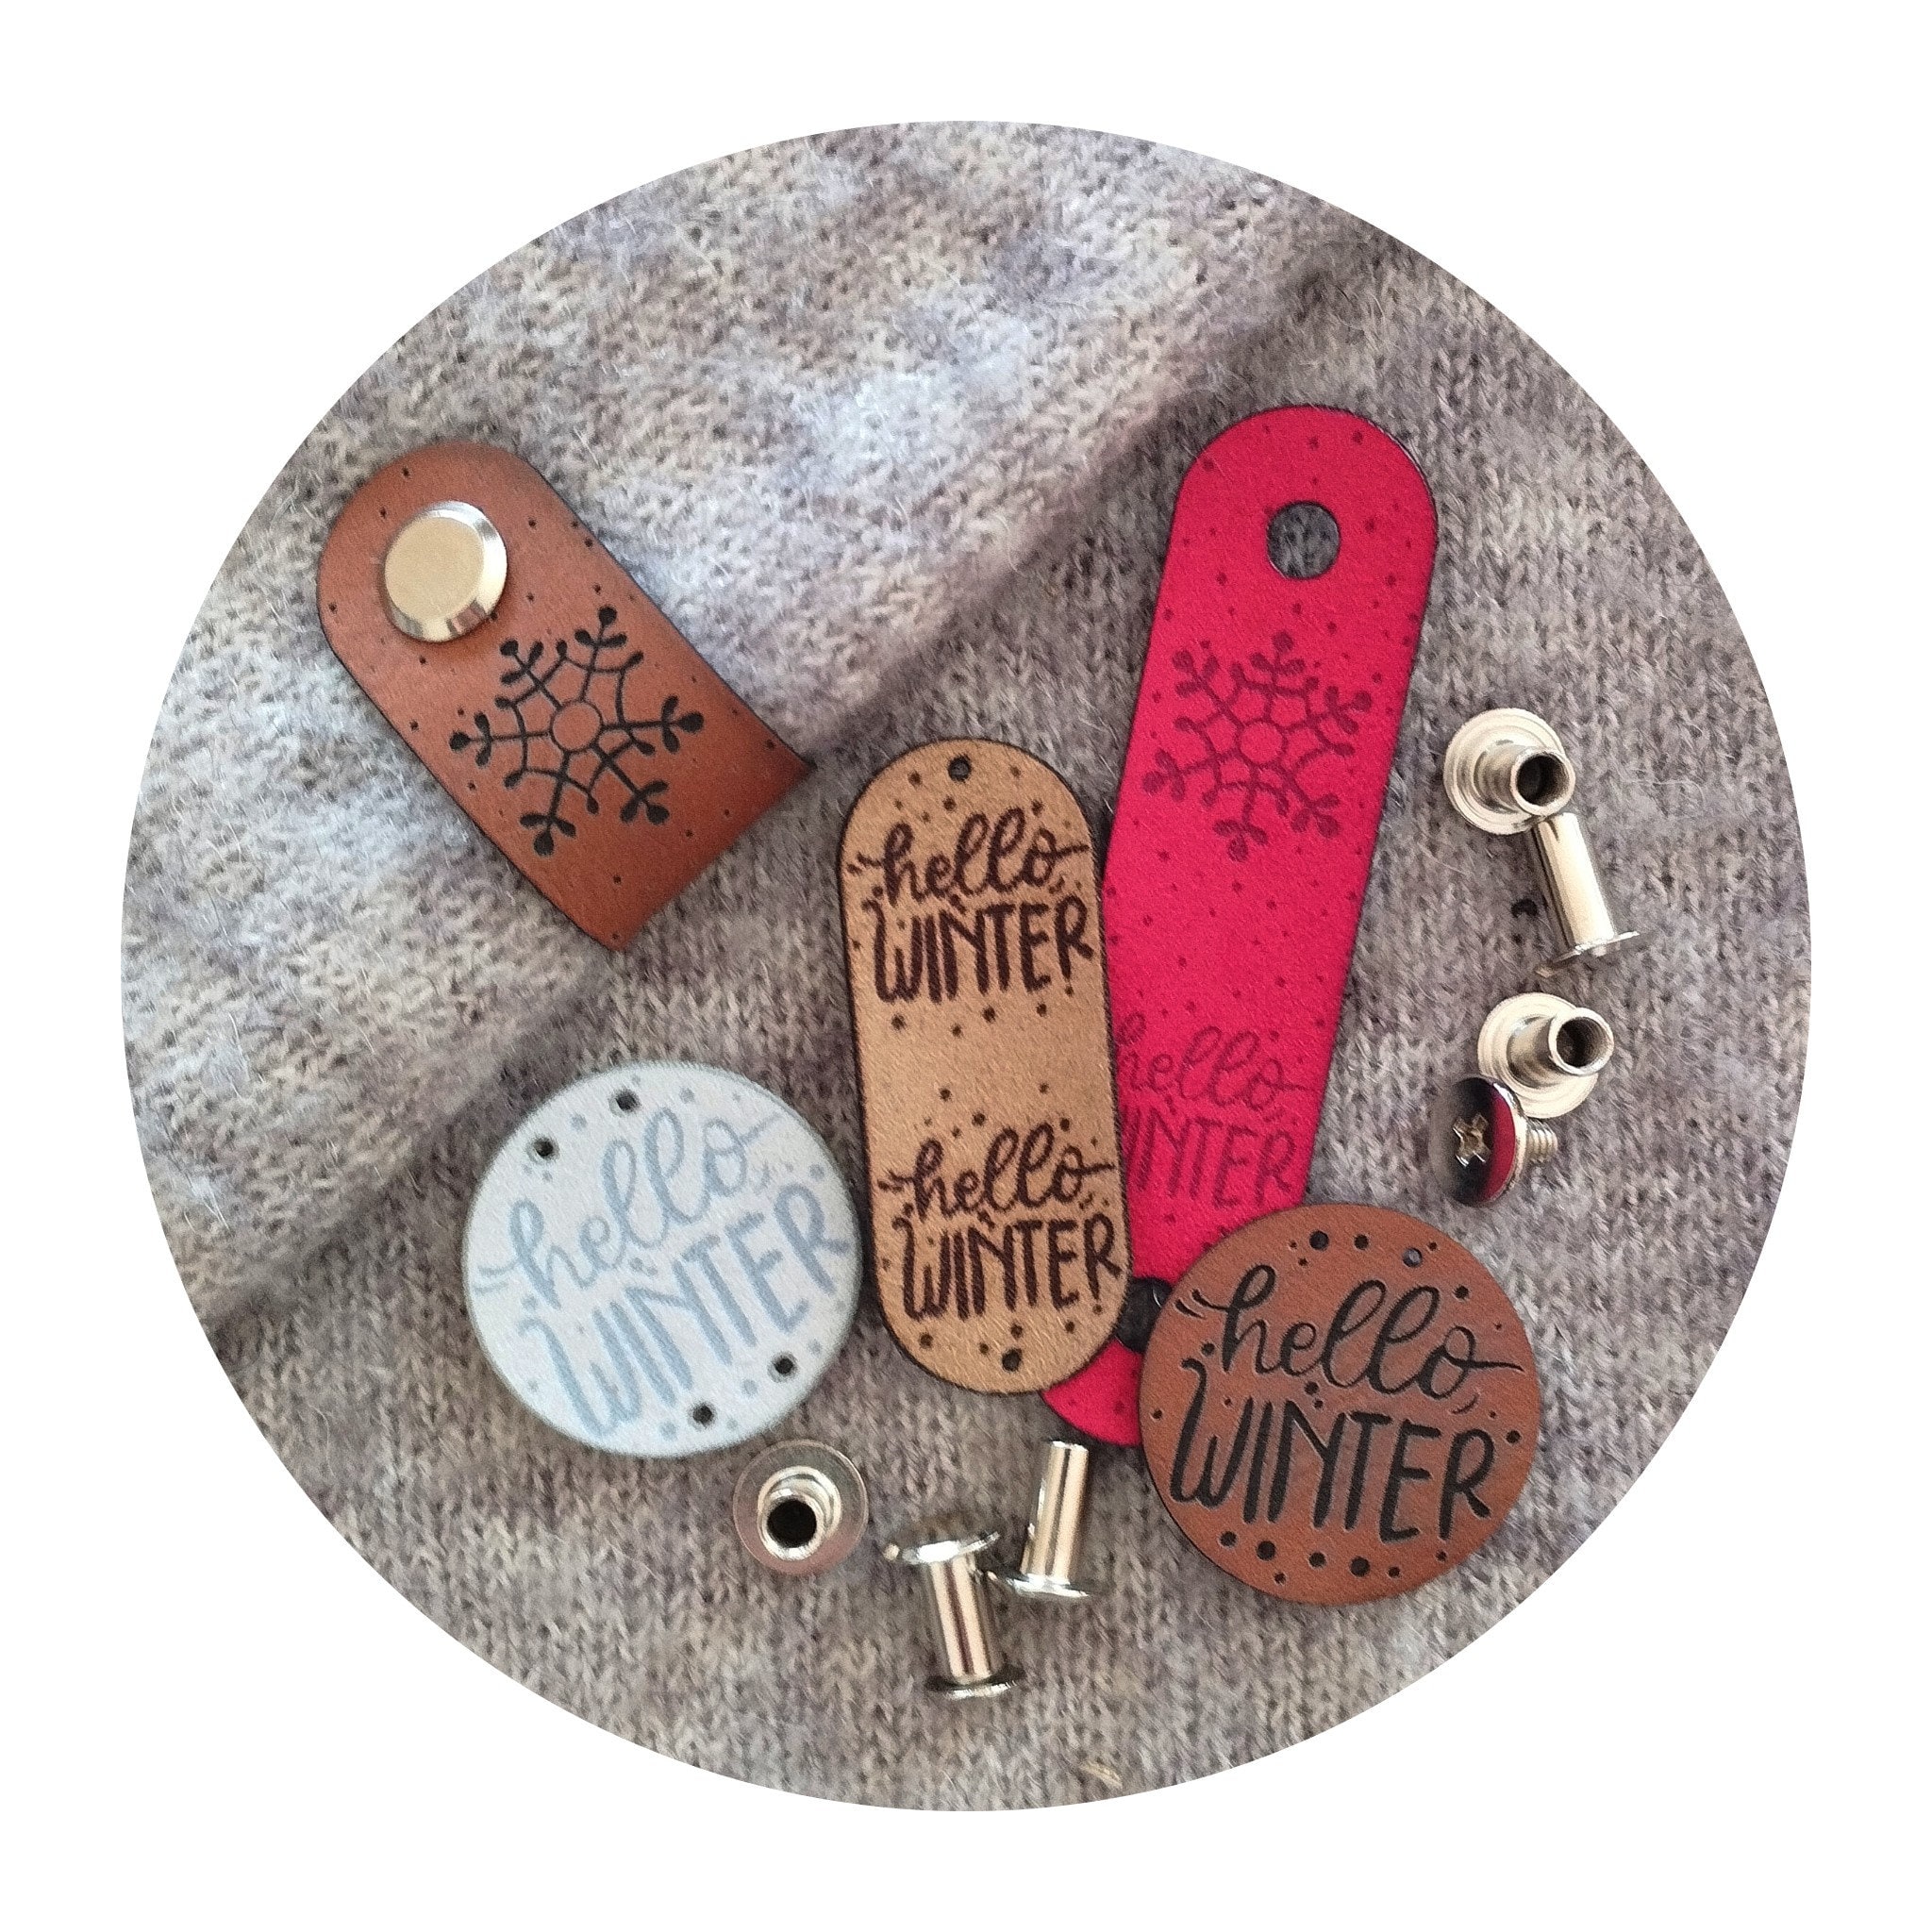 15x Customizable Rivet Leather Tags - Handmade labels with metal rivet  screw - Custom name beanie tags with rivets - tags for handmade items